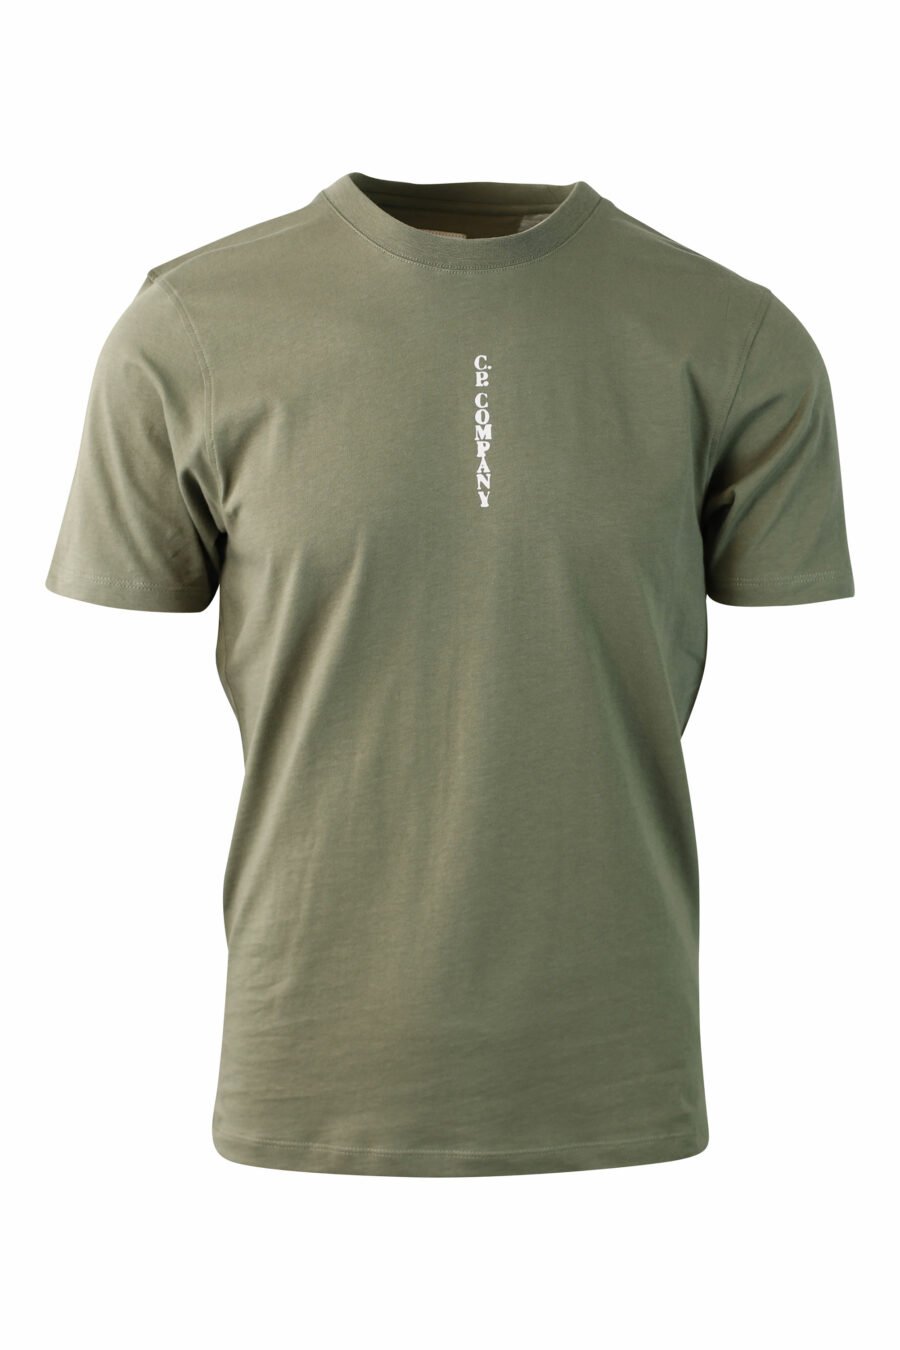 Camiseta verde militar con minilogo vertical - IMG 0063 1